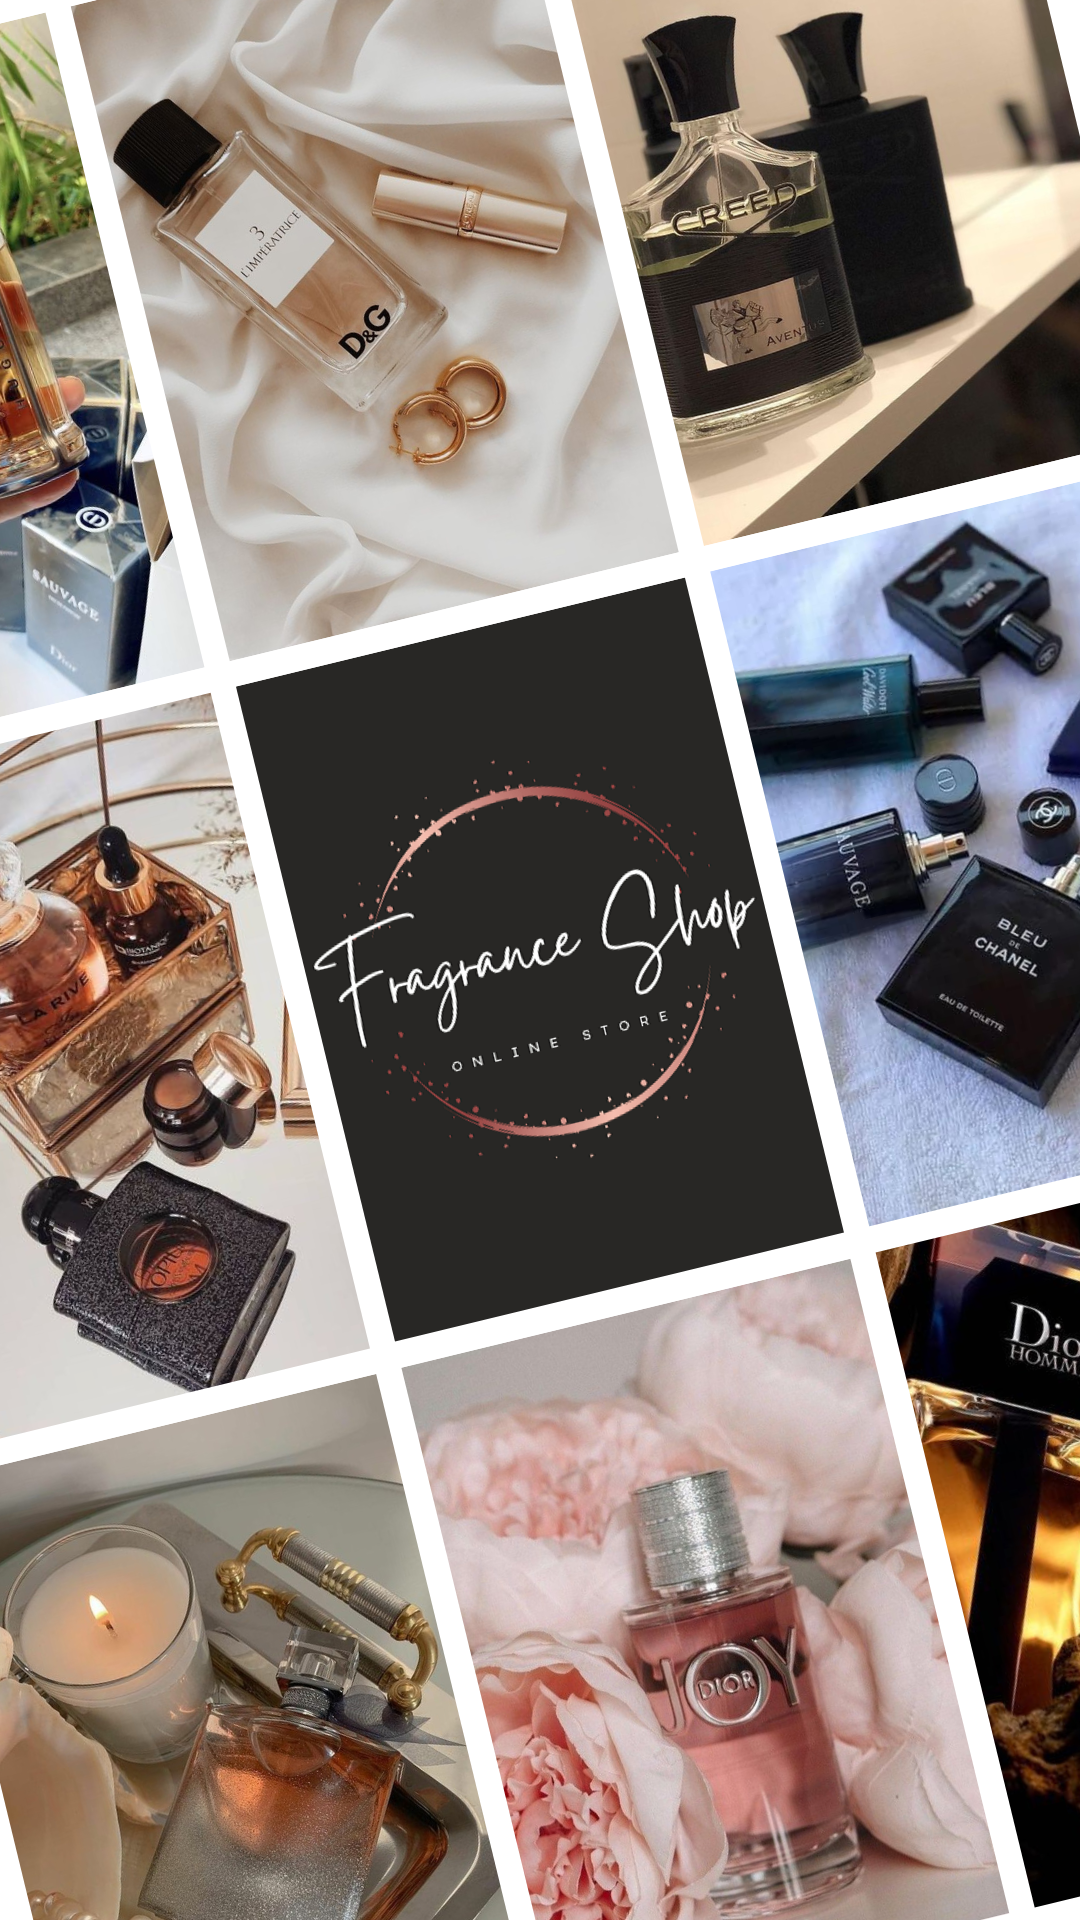 Our fragrances